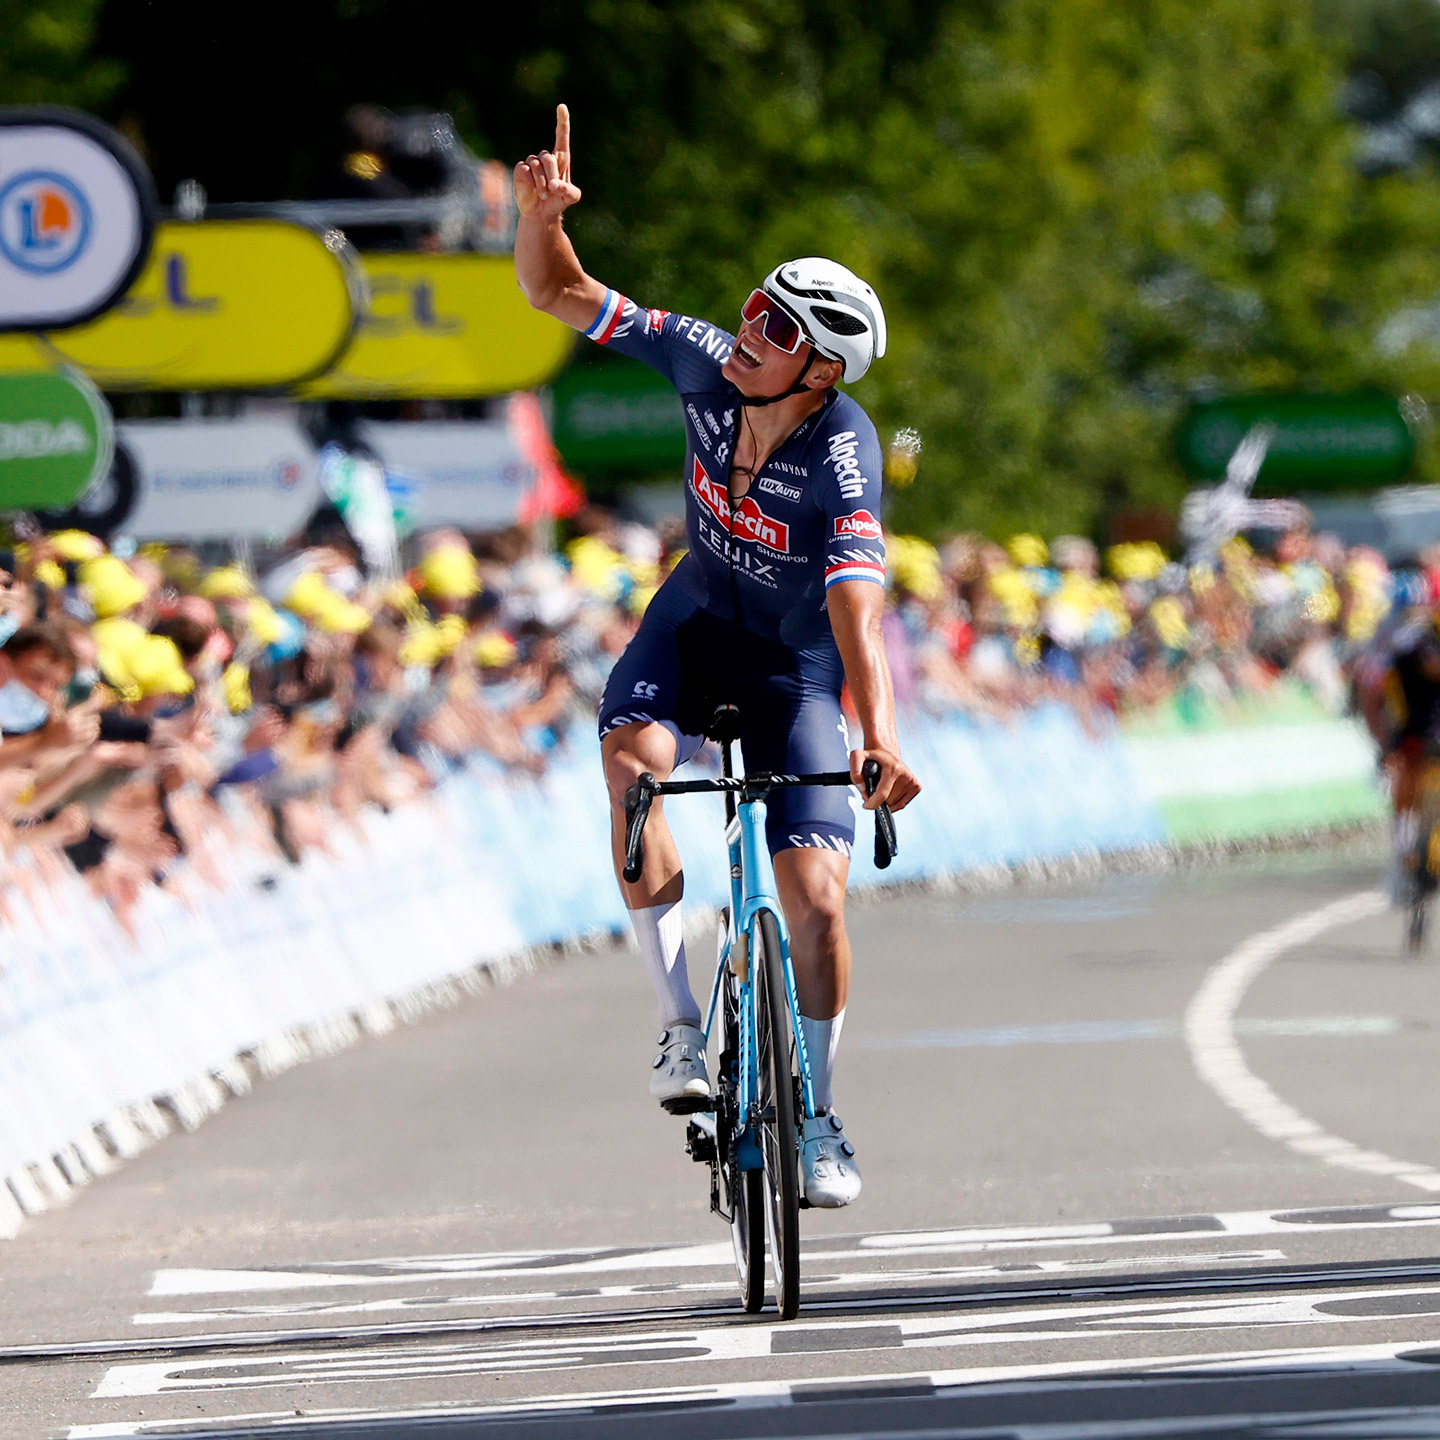 Mathieu van der Poel wins of stage 2 Tour de France and takes the